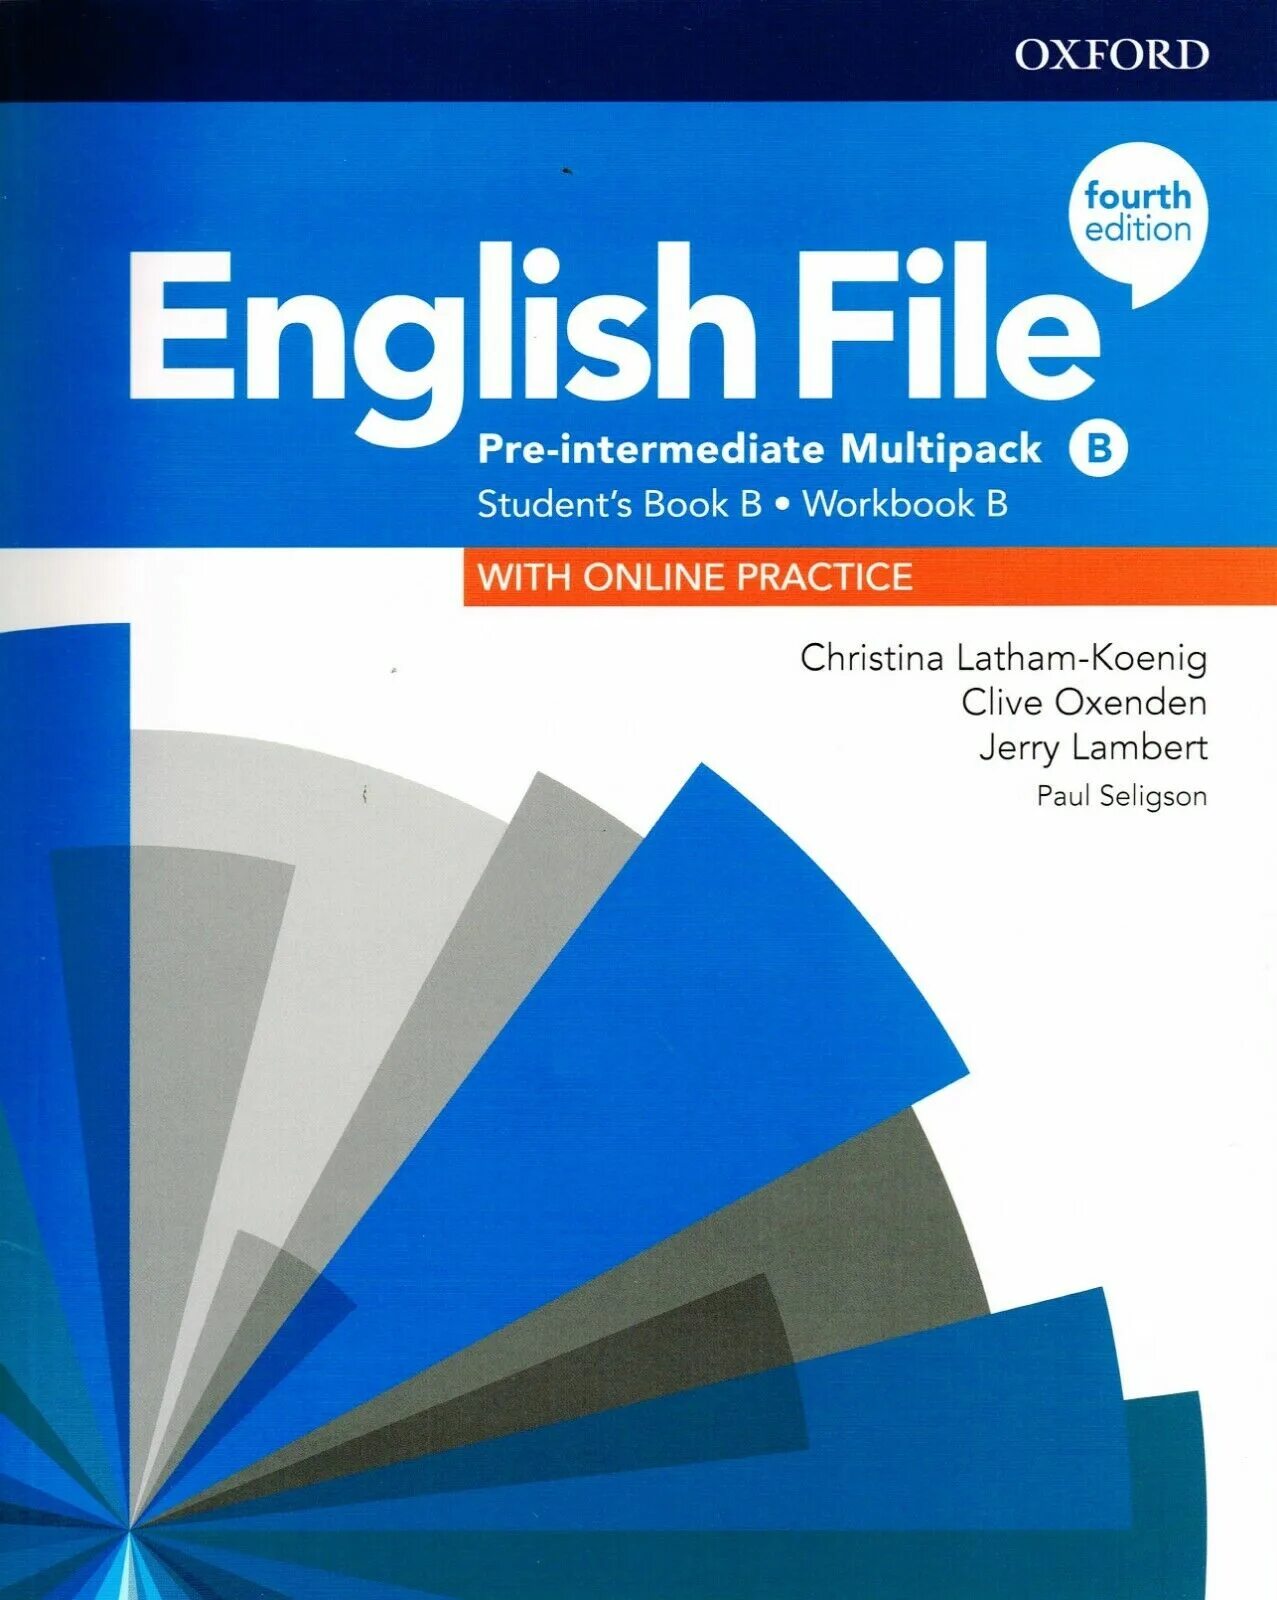 Английский Оксфорд English file Beginner Workbook. Инглиш файл 2 издание интермедиат. English file pre Intermediate 4th Edition. Oxford pre Intermediate Workbook fourth Edition.